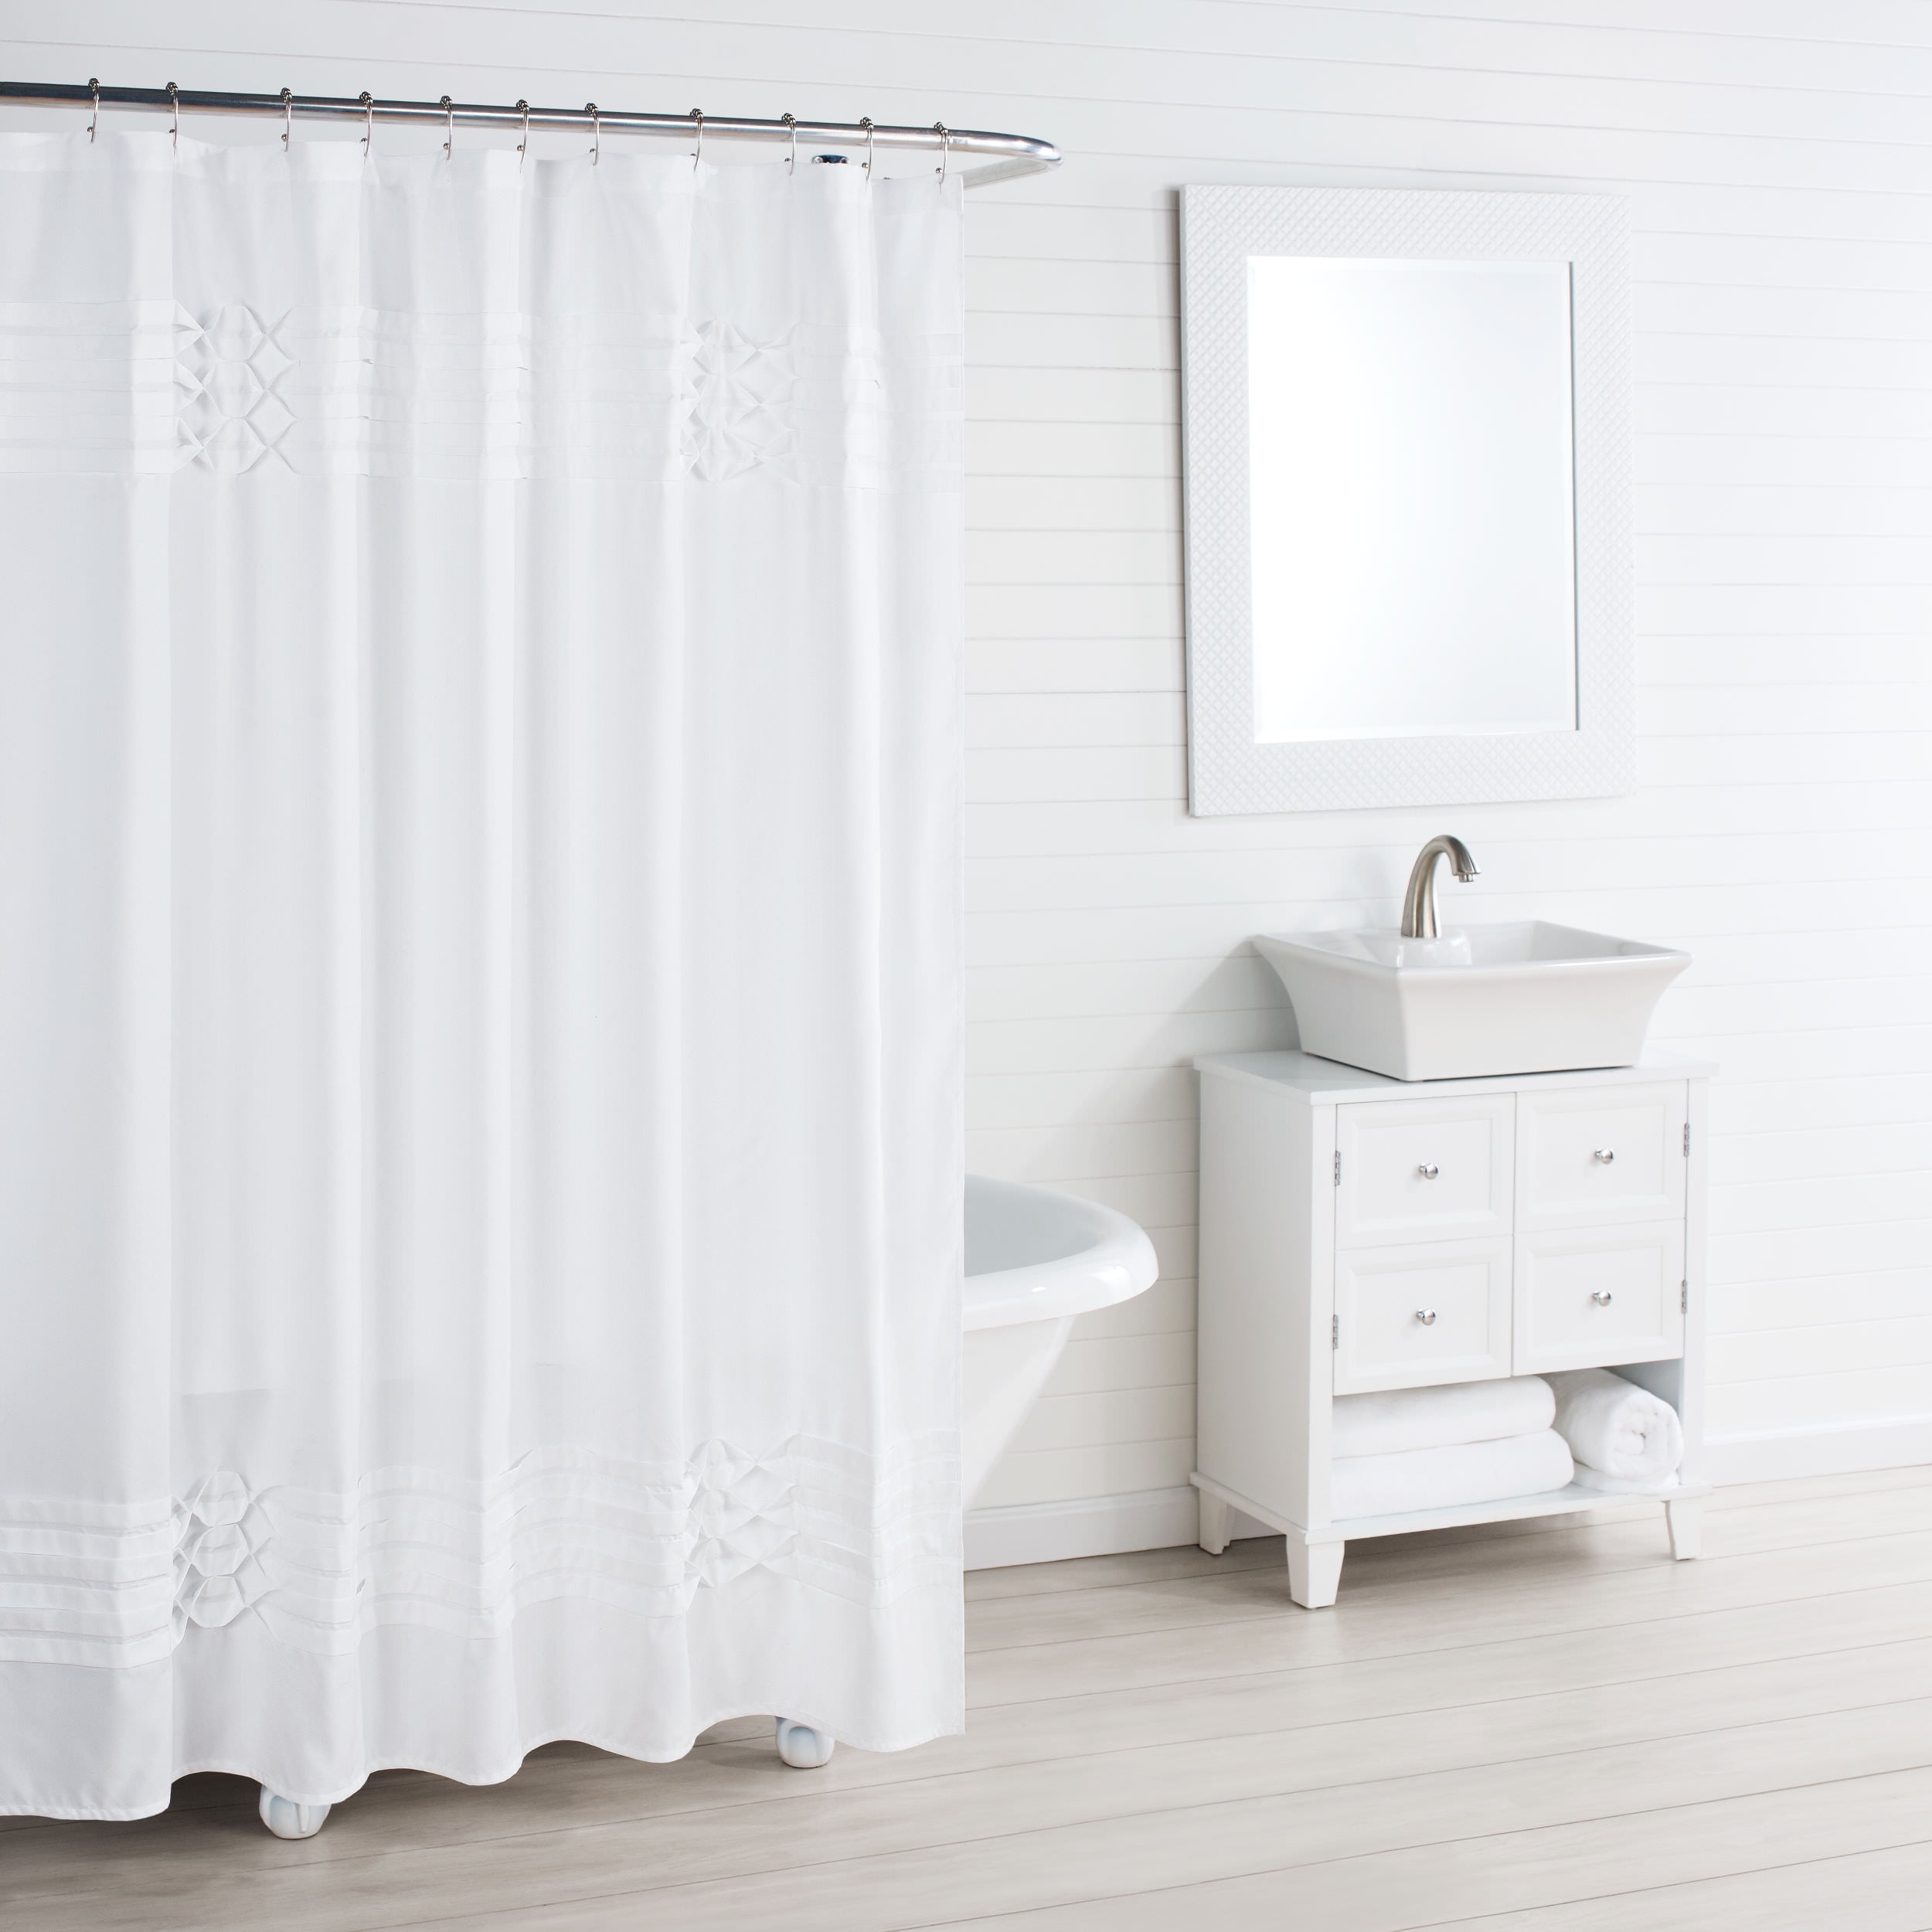 Clorox Waterproof Fabric Shower Curtain, Texas A&M Shower Curtain